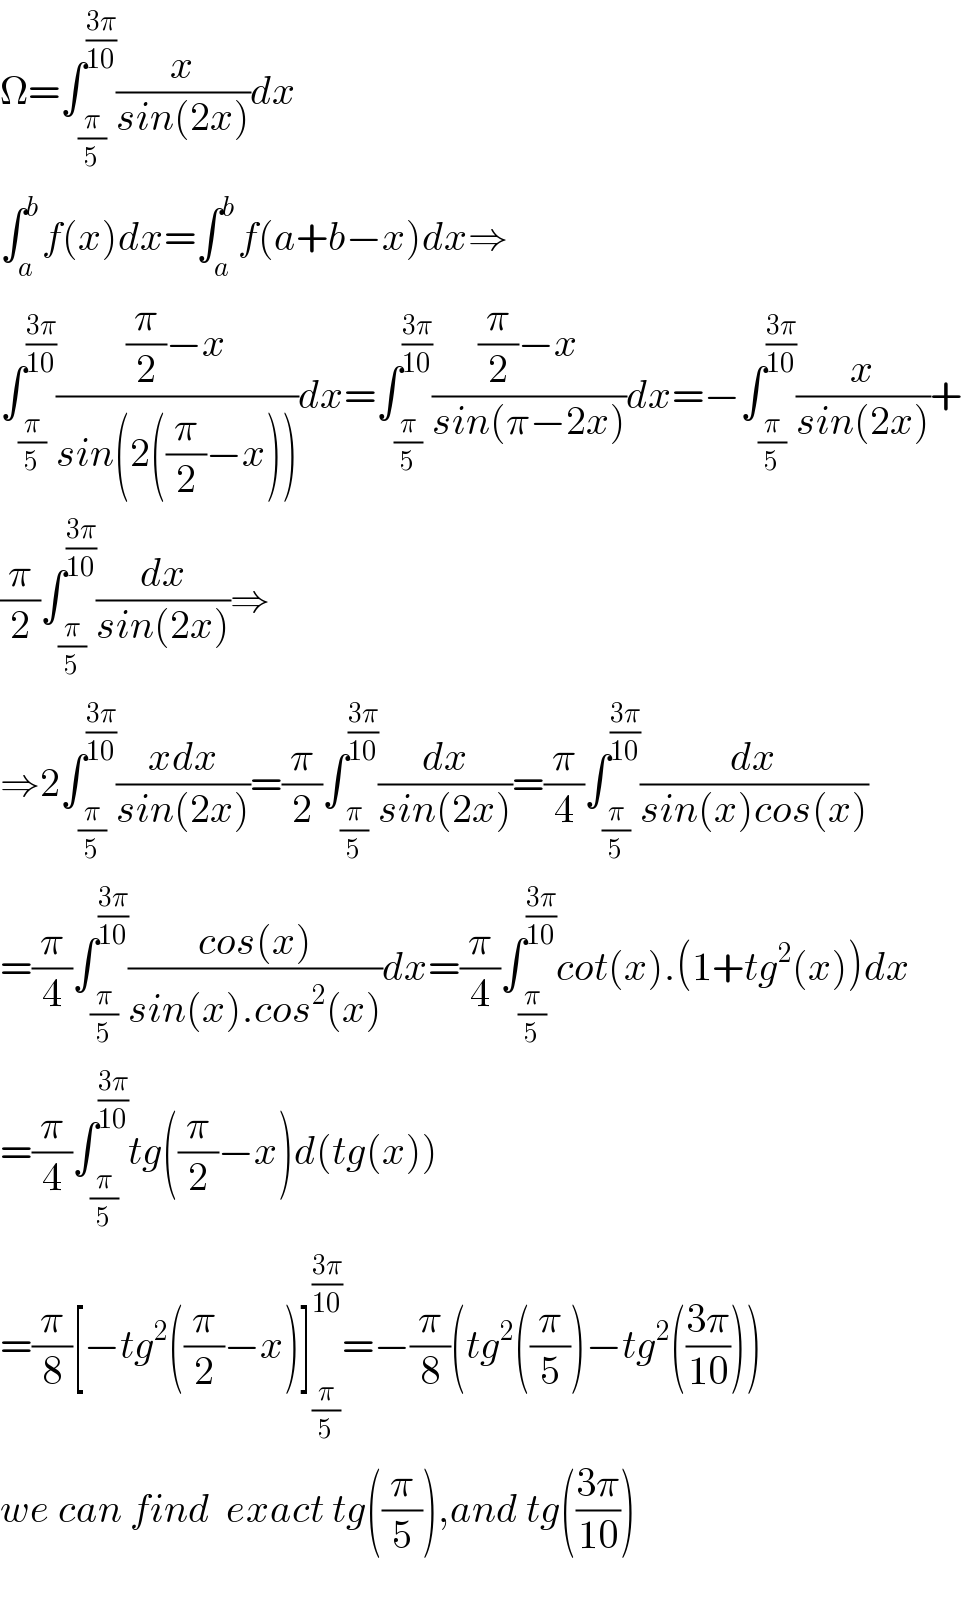 Ω=∫_(π/5) ^((3π)/(10)) (x/(sin(2x)))dx  ∫_a ^b f(x)dx=∫_a ^b f(a+b−x)dx⇒  ∫_(π/5) ^((3π)/(10)) (((π/2)−x)/(sin(2((π/2)−x))))dx=∫_(π/5) ^((3π)/(10)) (((π/2)−x)/(sin(π−2x)))dx=−∫_(π/5) ^((3π)/(10)) (x/(sin(2x)))+  (π/2)∫_(π/5) ^((3π)/(10)) (dx/(sin(2x)))⇒  ⇒2∫_(π/5) ^((3π)/(10)) ((xdx)/(sin(2x)))=(π/2)∫_(π/5) ^((3π)/(10)) (dx/(sin(2x)))=(π/4)∫_(π/5) ^((3π)/(10)) (dx/(sin(x)cos(x)))  =(π/4)∫_(π/5) ^((3π)/(10)) ((cos(x))/(sin(x).cos^2 (x)))dx=(π/4)∫_(π/5) ^((3π)/(10)) cot(x).(1+tg^2 (x))dx  =(π/4)∫_(π/5) ^((3π)/(10)) tg((π/2)−x)d(tg(x))  =(π/8)[−tg^2 ((π/2)−x)]_(π/5) ^((3π)/(10)) =−(π/8)(tg^2 ((π/5))−tg^2 (((3π)/(10))))  we can find  exact tg((π/5)),and tg(((3π)/(10)))    